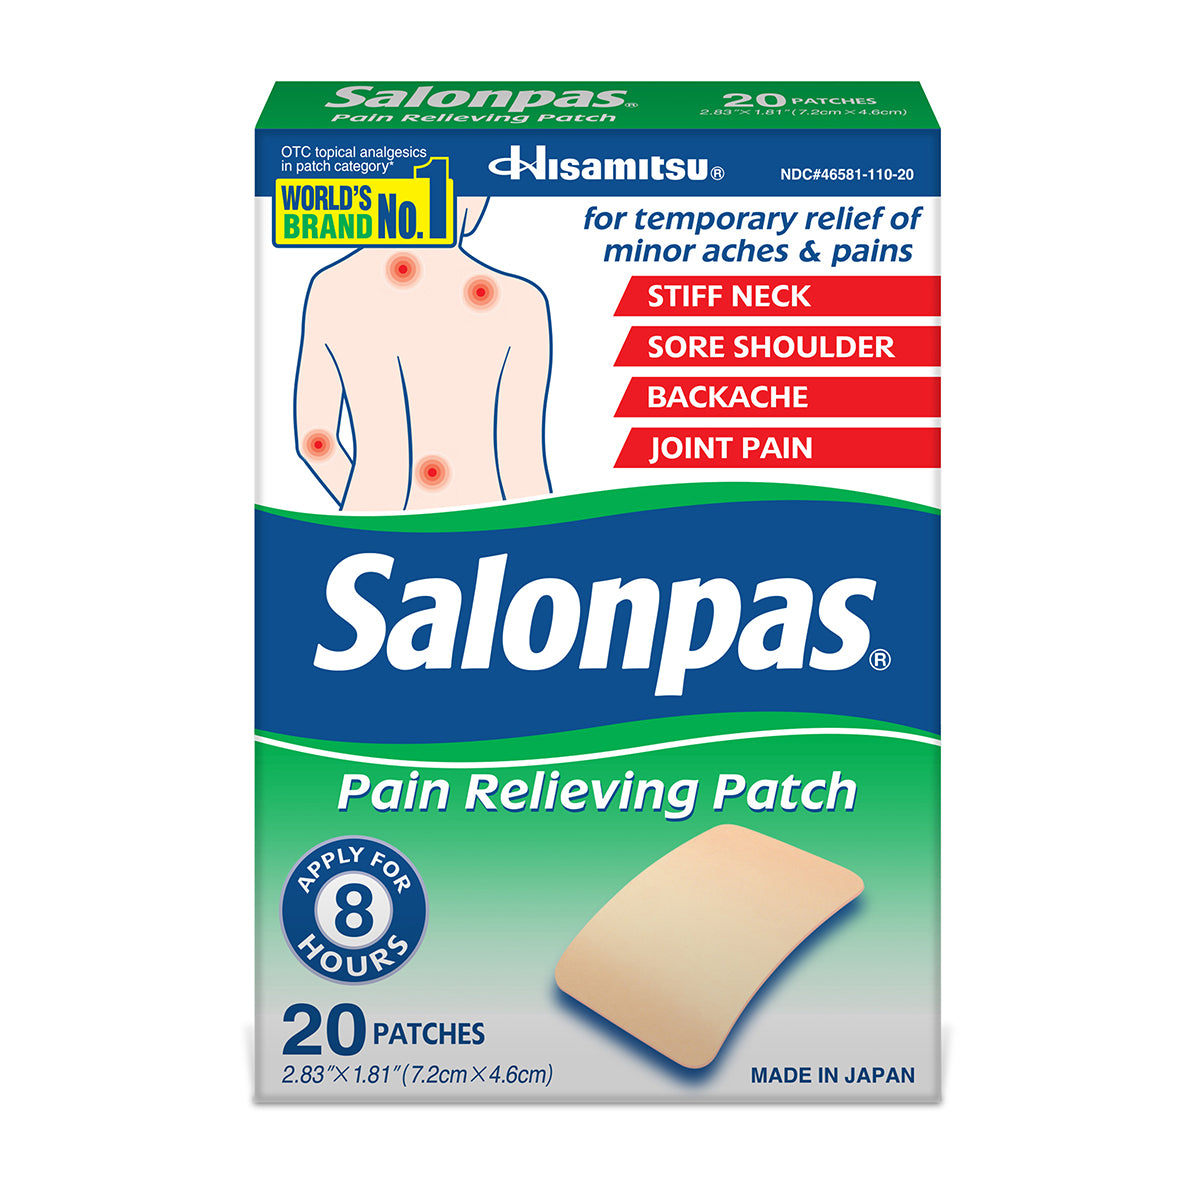 salonpas pain relieving patch - 20 sheets